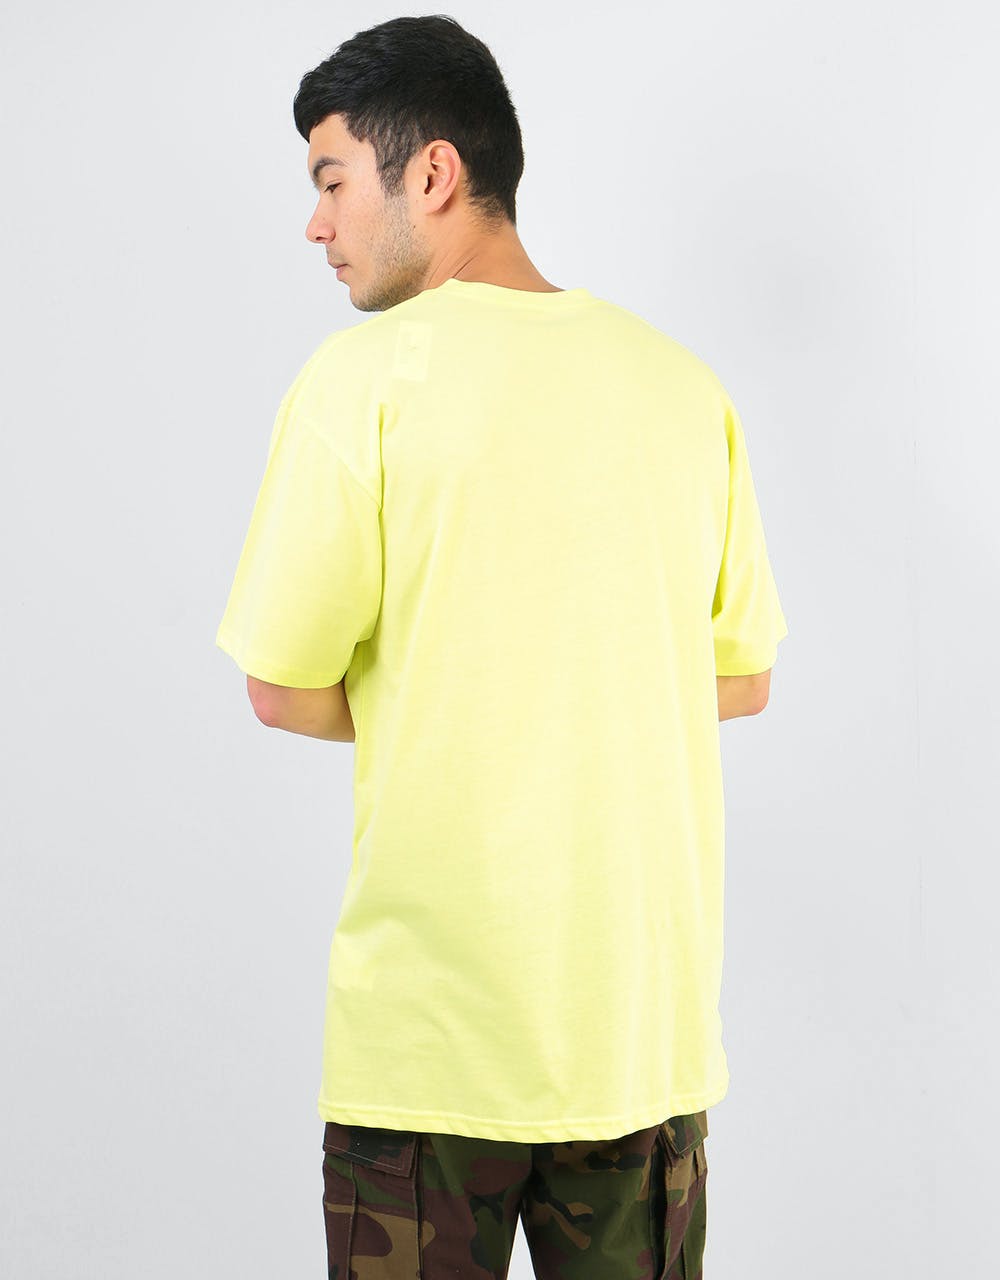 Vans Classic T-Shirt - Sunny Lime/White